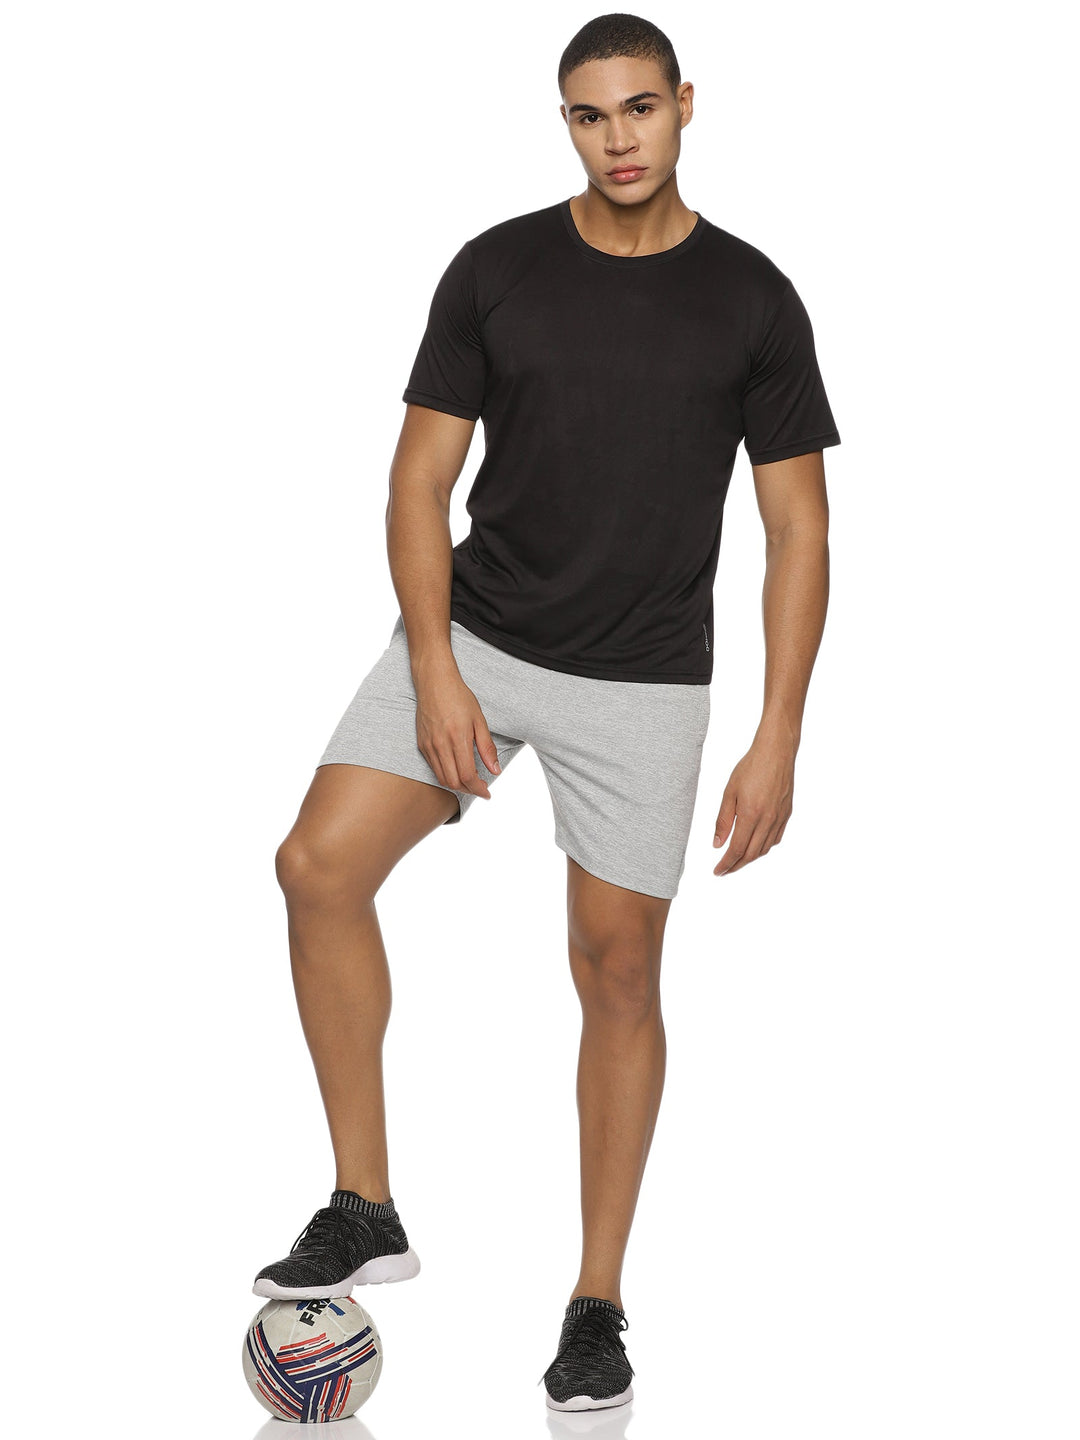 Men's Cut And Sew Training Shorts With Elastic Waist Band & Zipper Pockets (Grey)